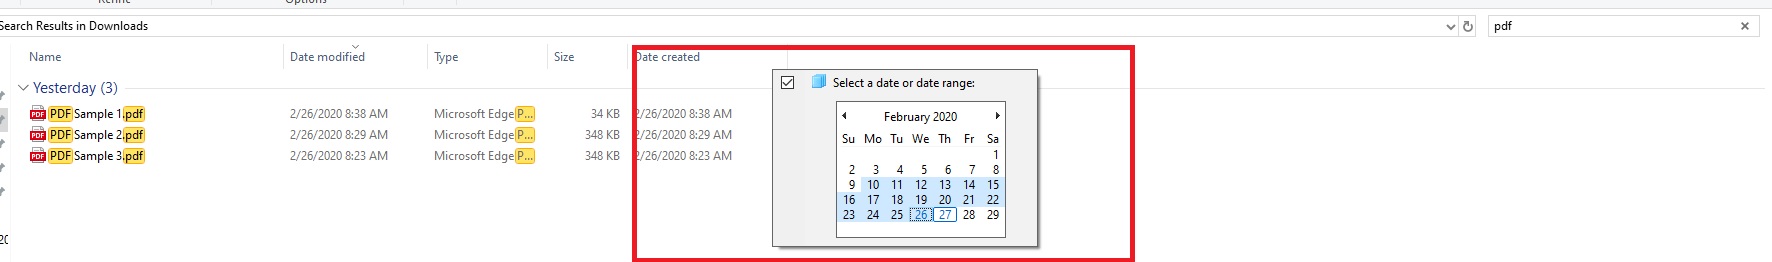 Windows Explorer search by date calendar not showing up anymore ced51e54-1c36-42ca-b14d-358411a5d0a1?upload=true.jpg